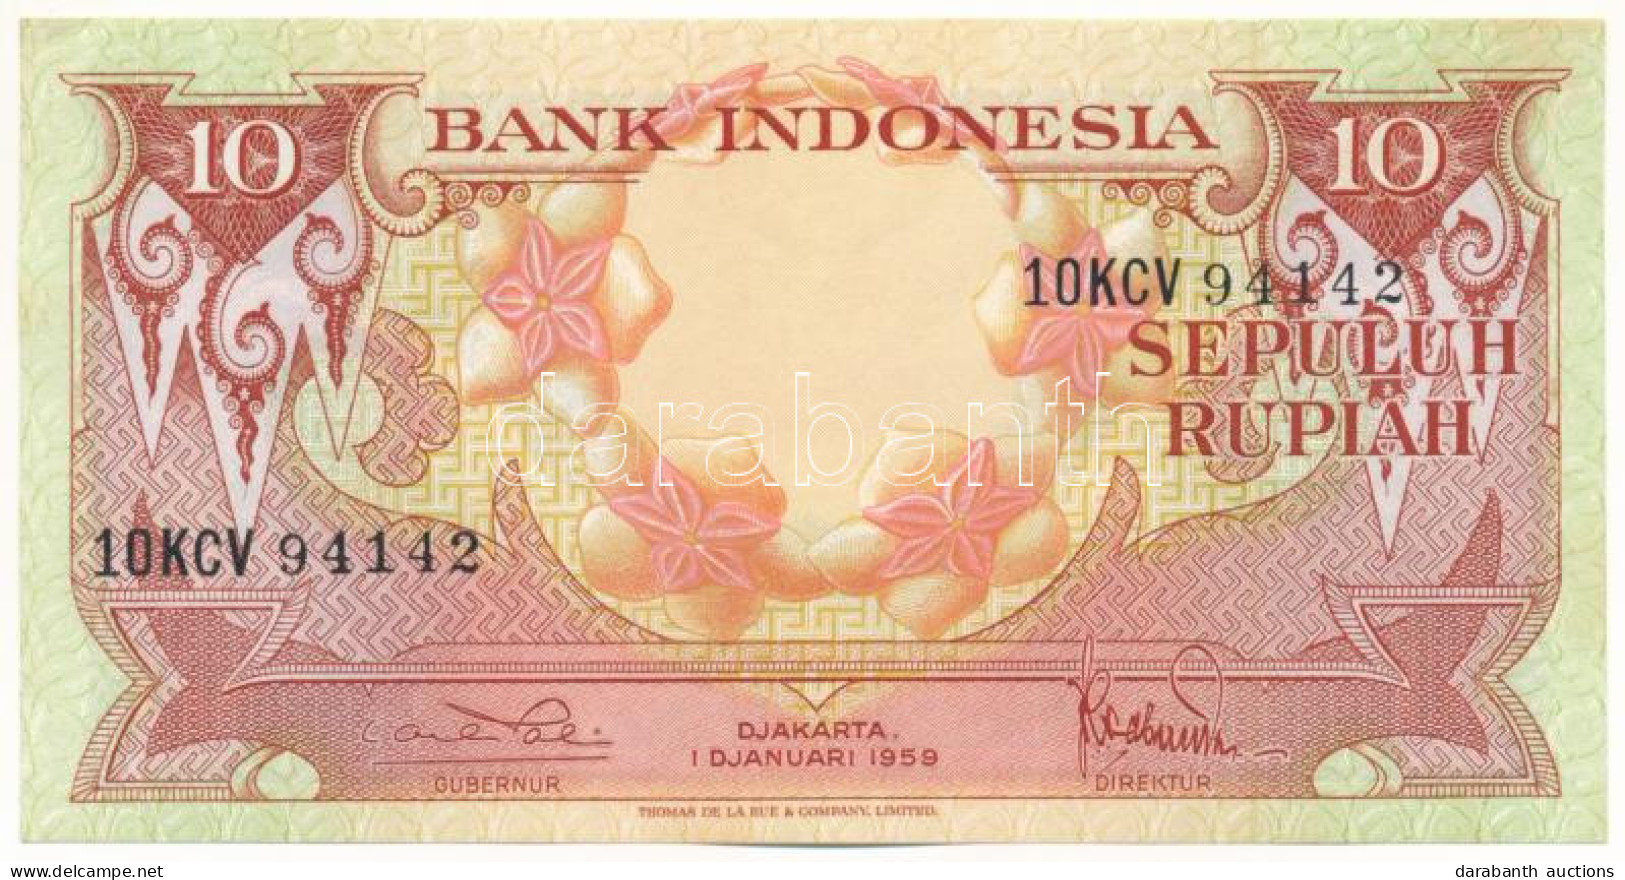 Indonézia 1959. 10R "'10KCV 94142" T:AU  Indonesia 1959. 10 Rupiah "10KCV 94142" C:AU  Krause P#66 - Unclassified